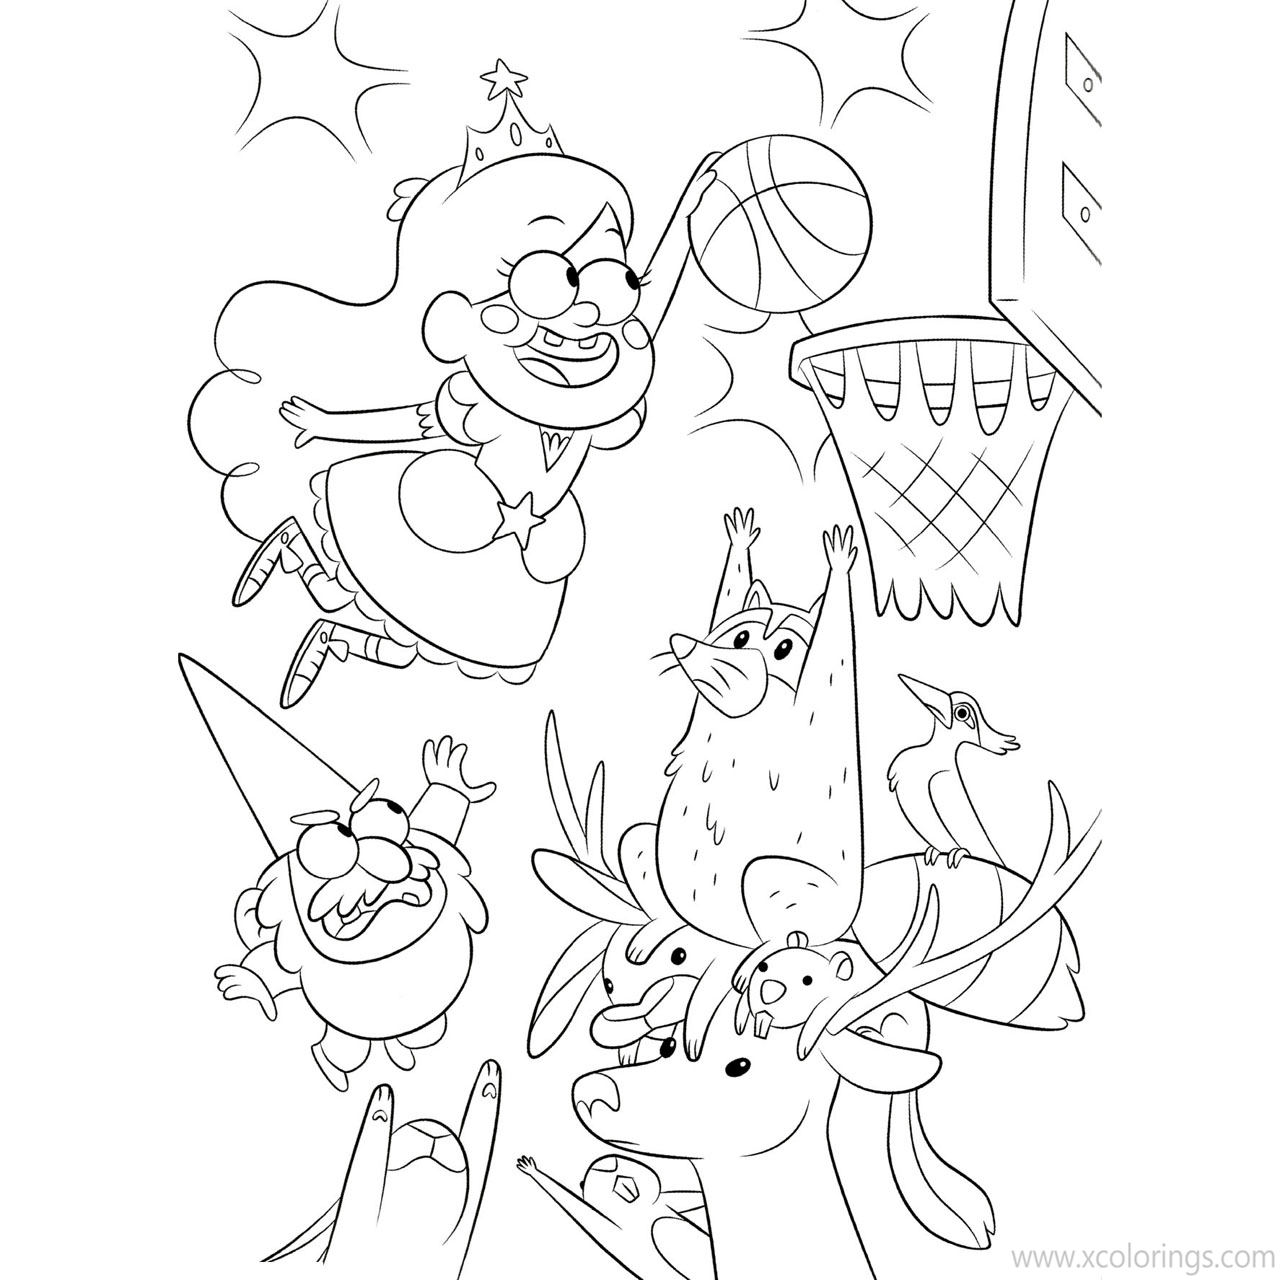 Free Gravity Falls Coloring Pages Mabel Playing Basketball printable